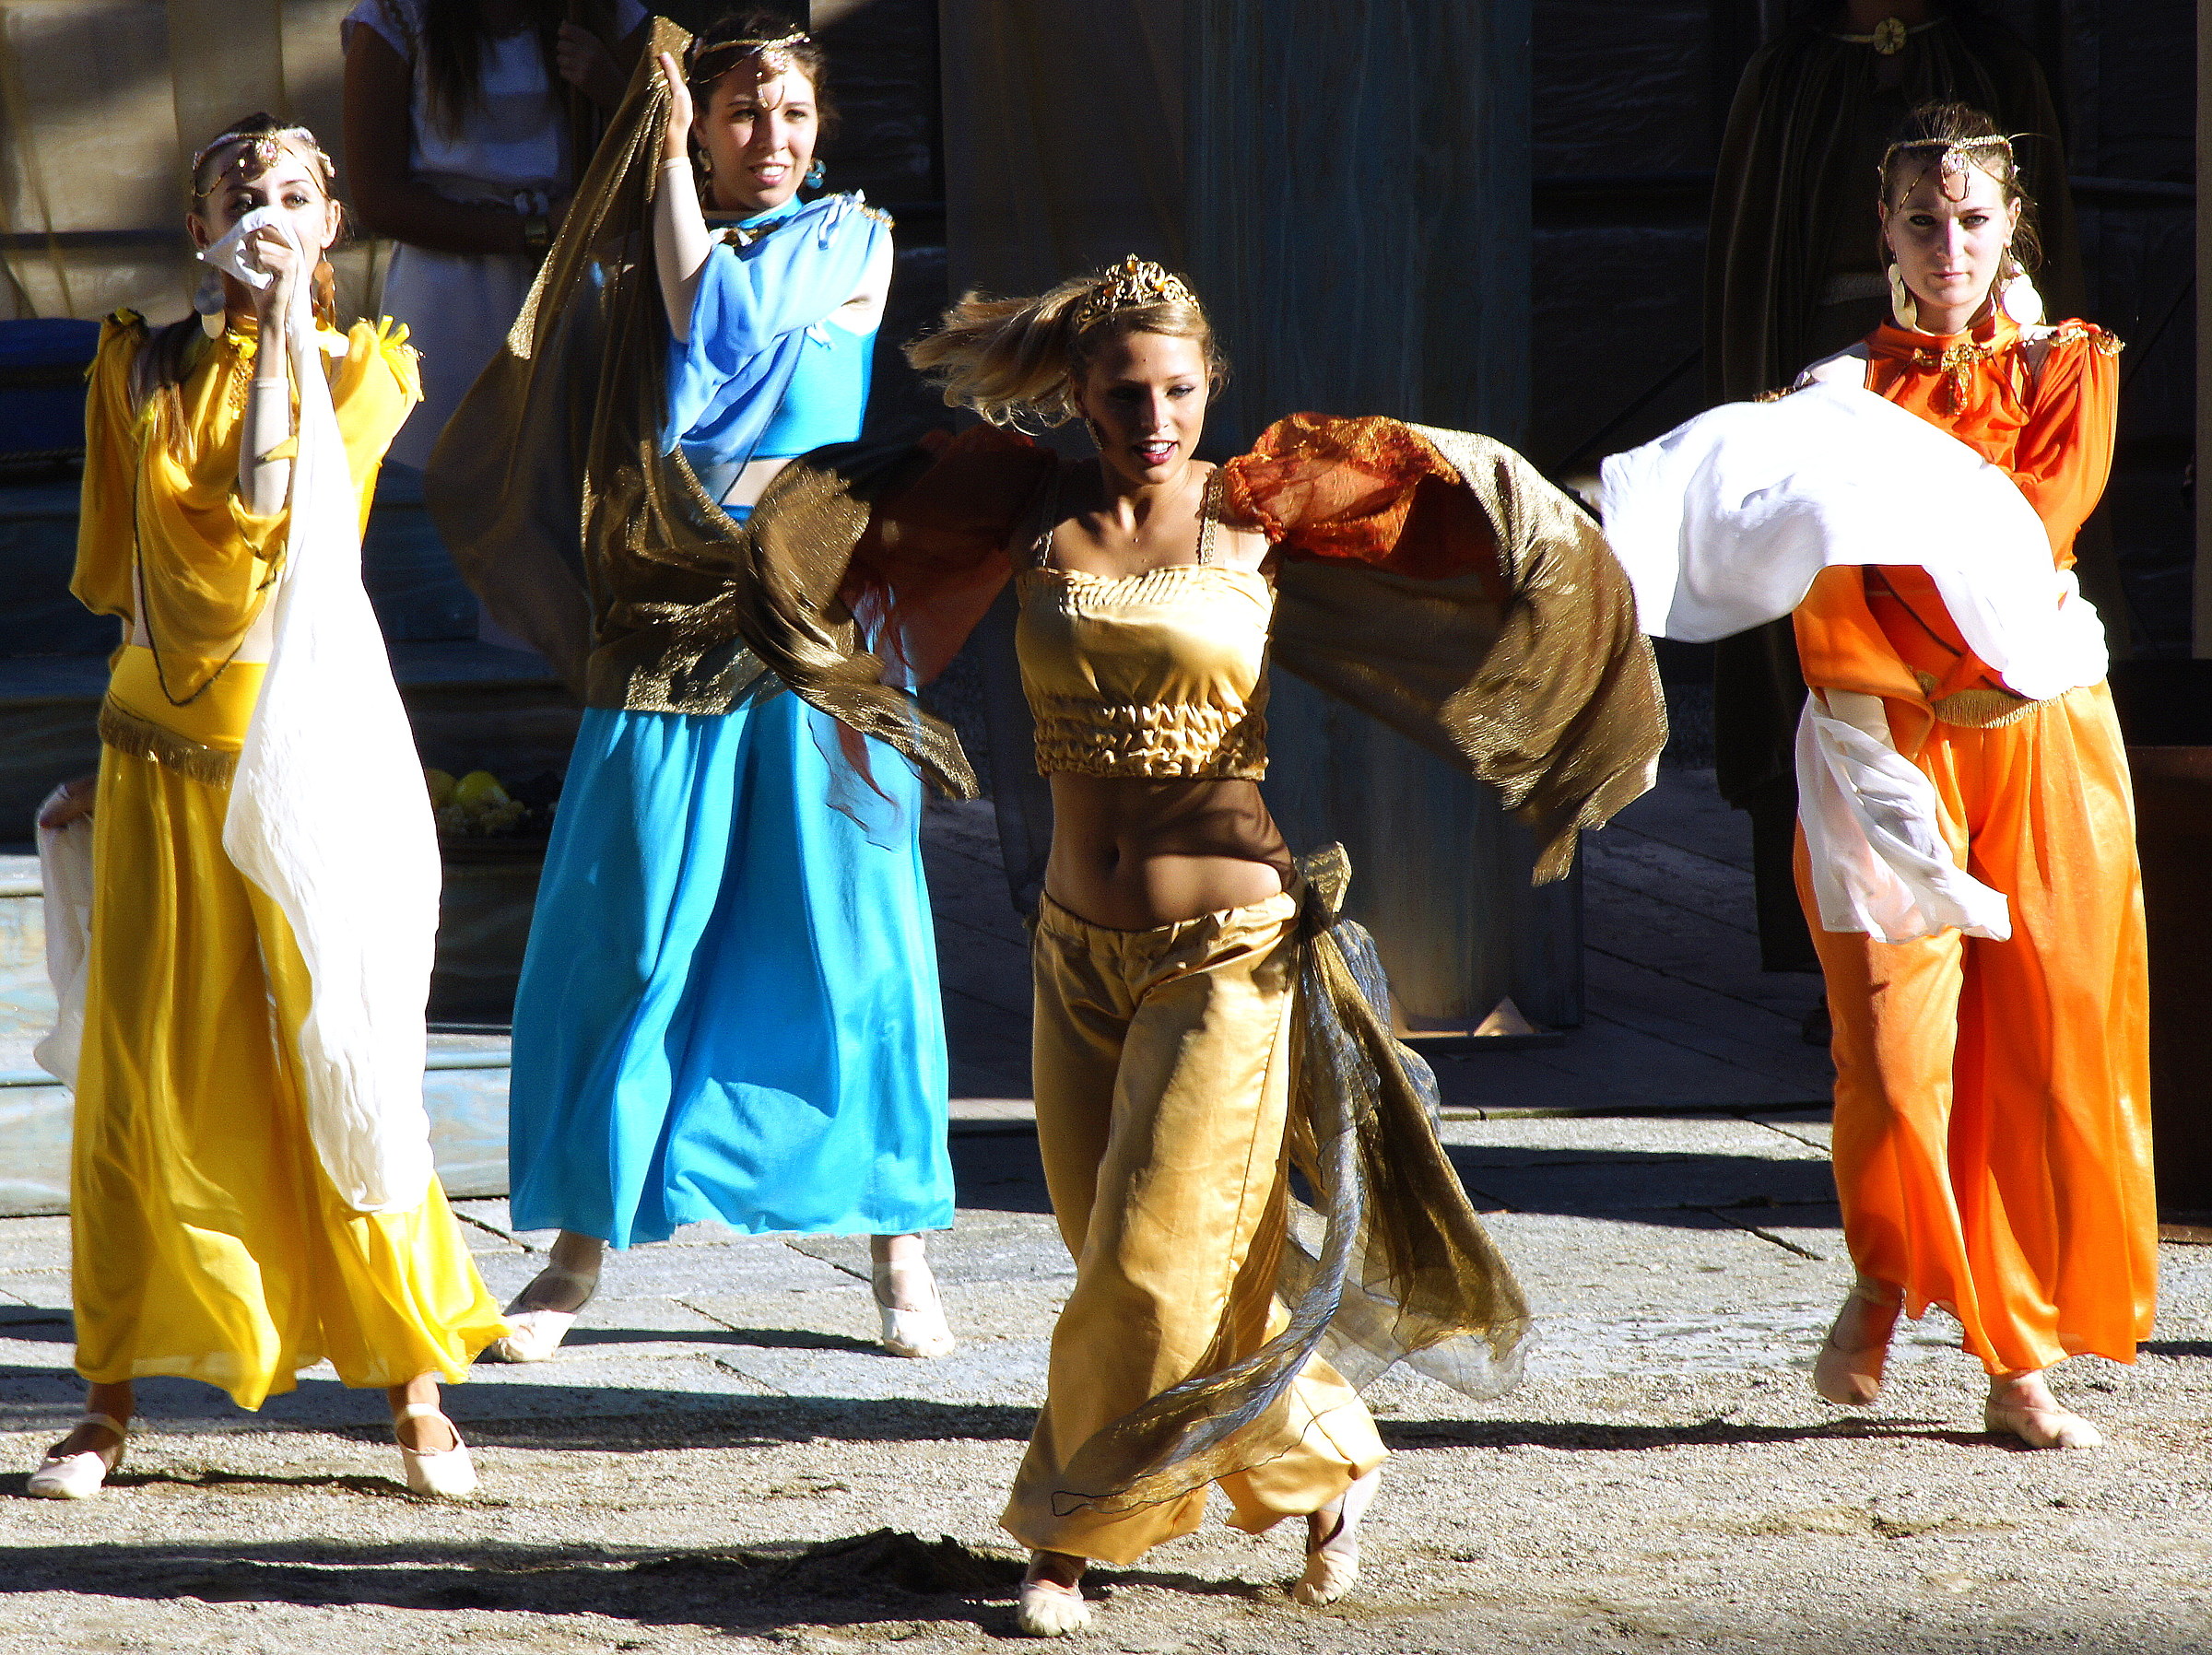 The dance of Herod ......